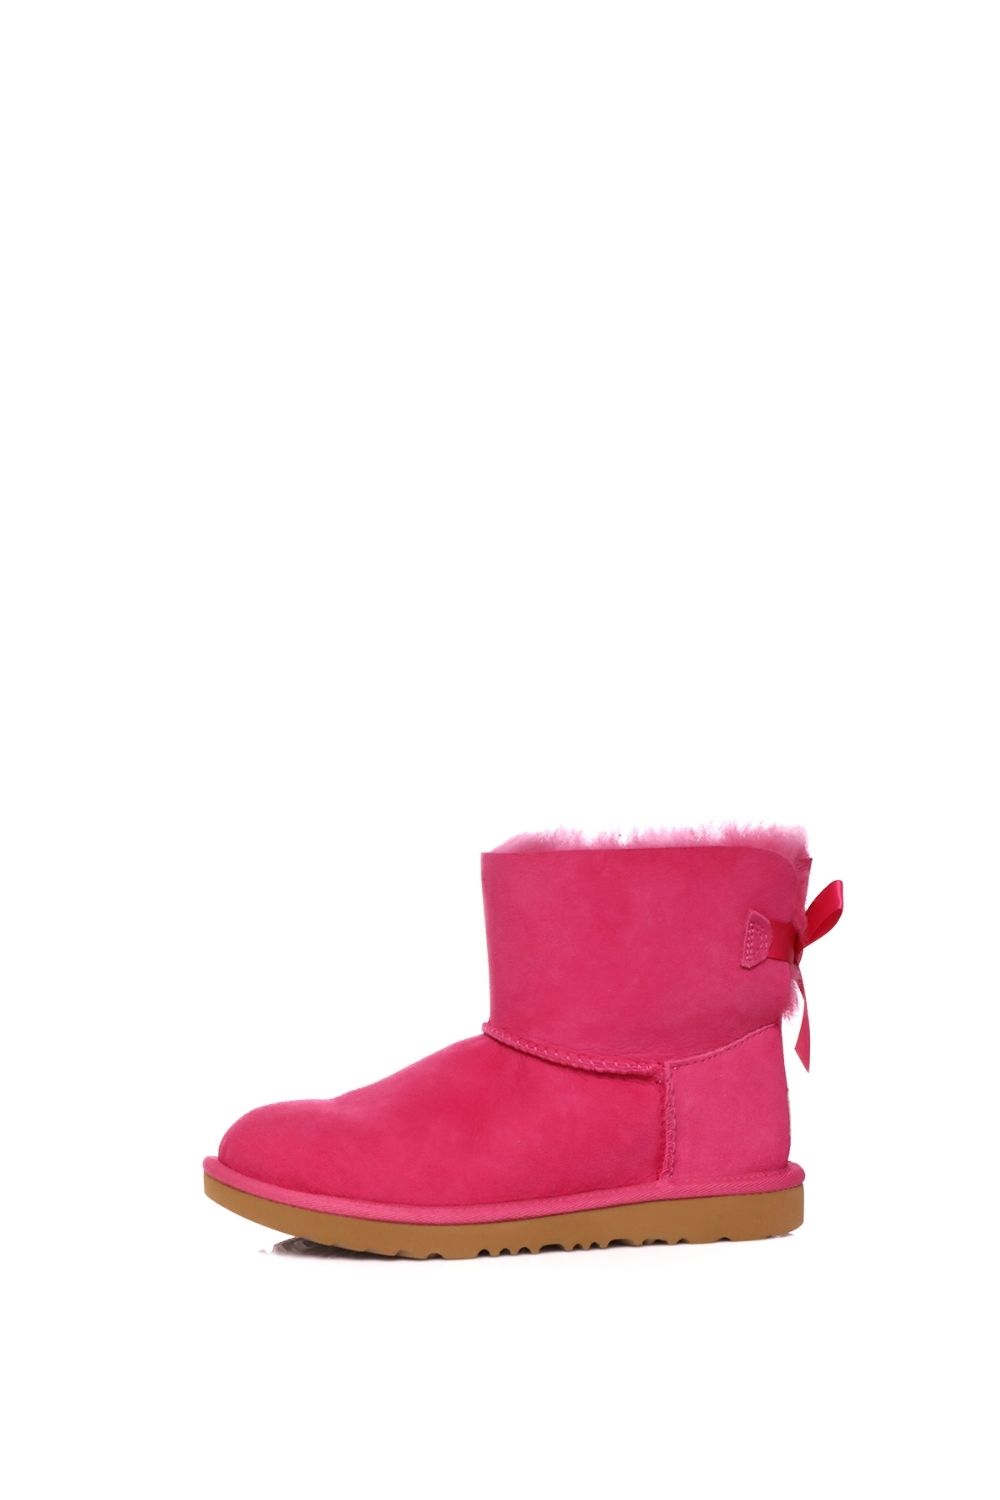 UGG - Παιδικά μποτάκια UGG MINI BAILEY BOW II ροζ Παιδικά/Girls/Παπούτσια/Μπότες-Μποτάκια